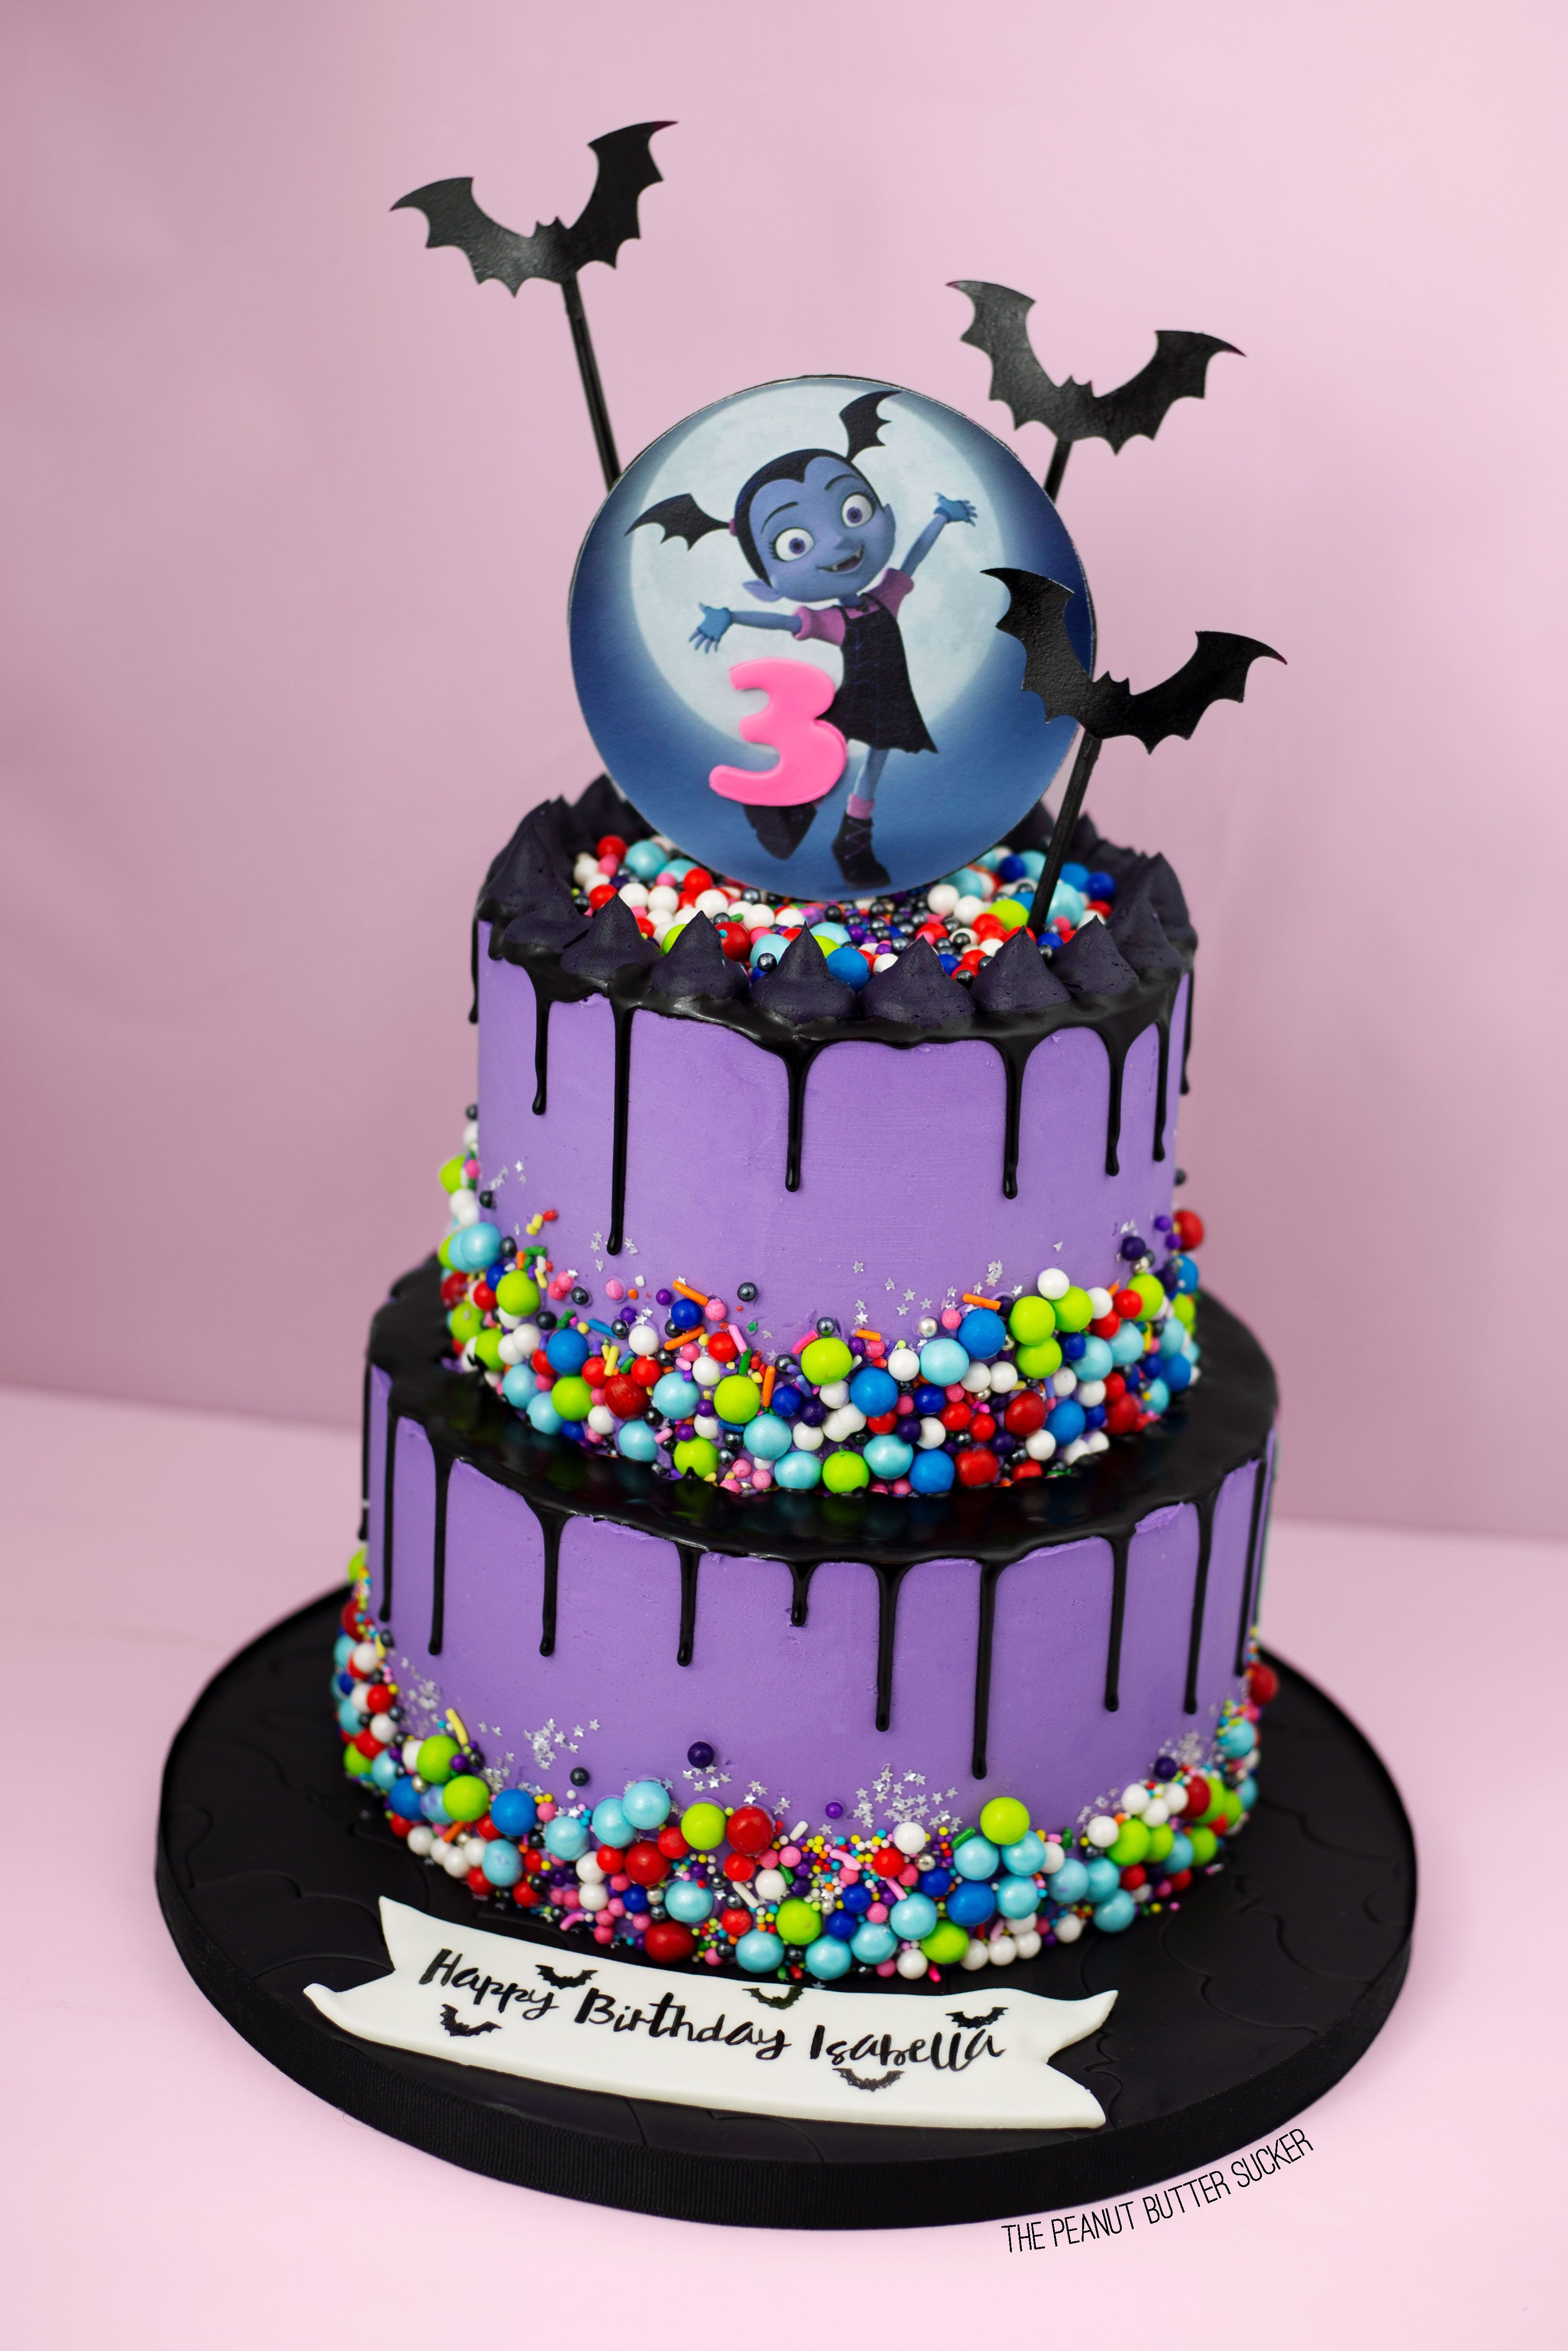 Best ideas about Vampirina Birthday Cake
. Save or Pin Vampirina Inspired Birthday Cake Bday Now.